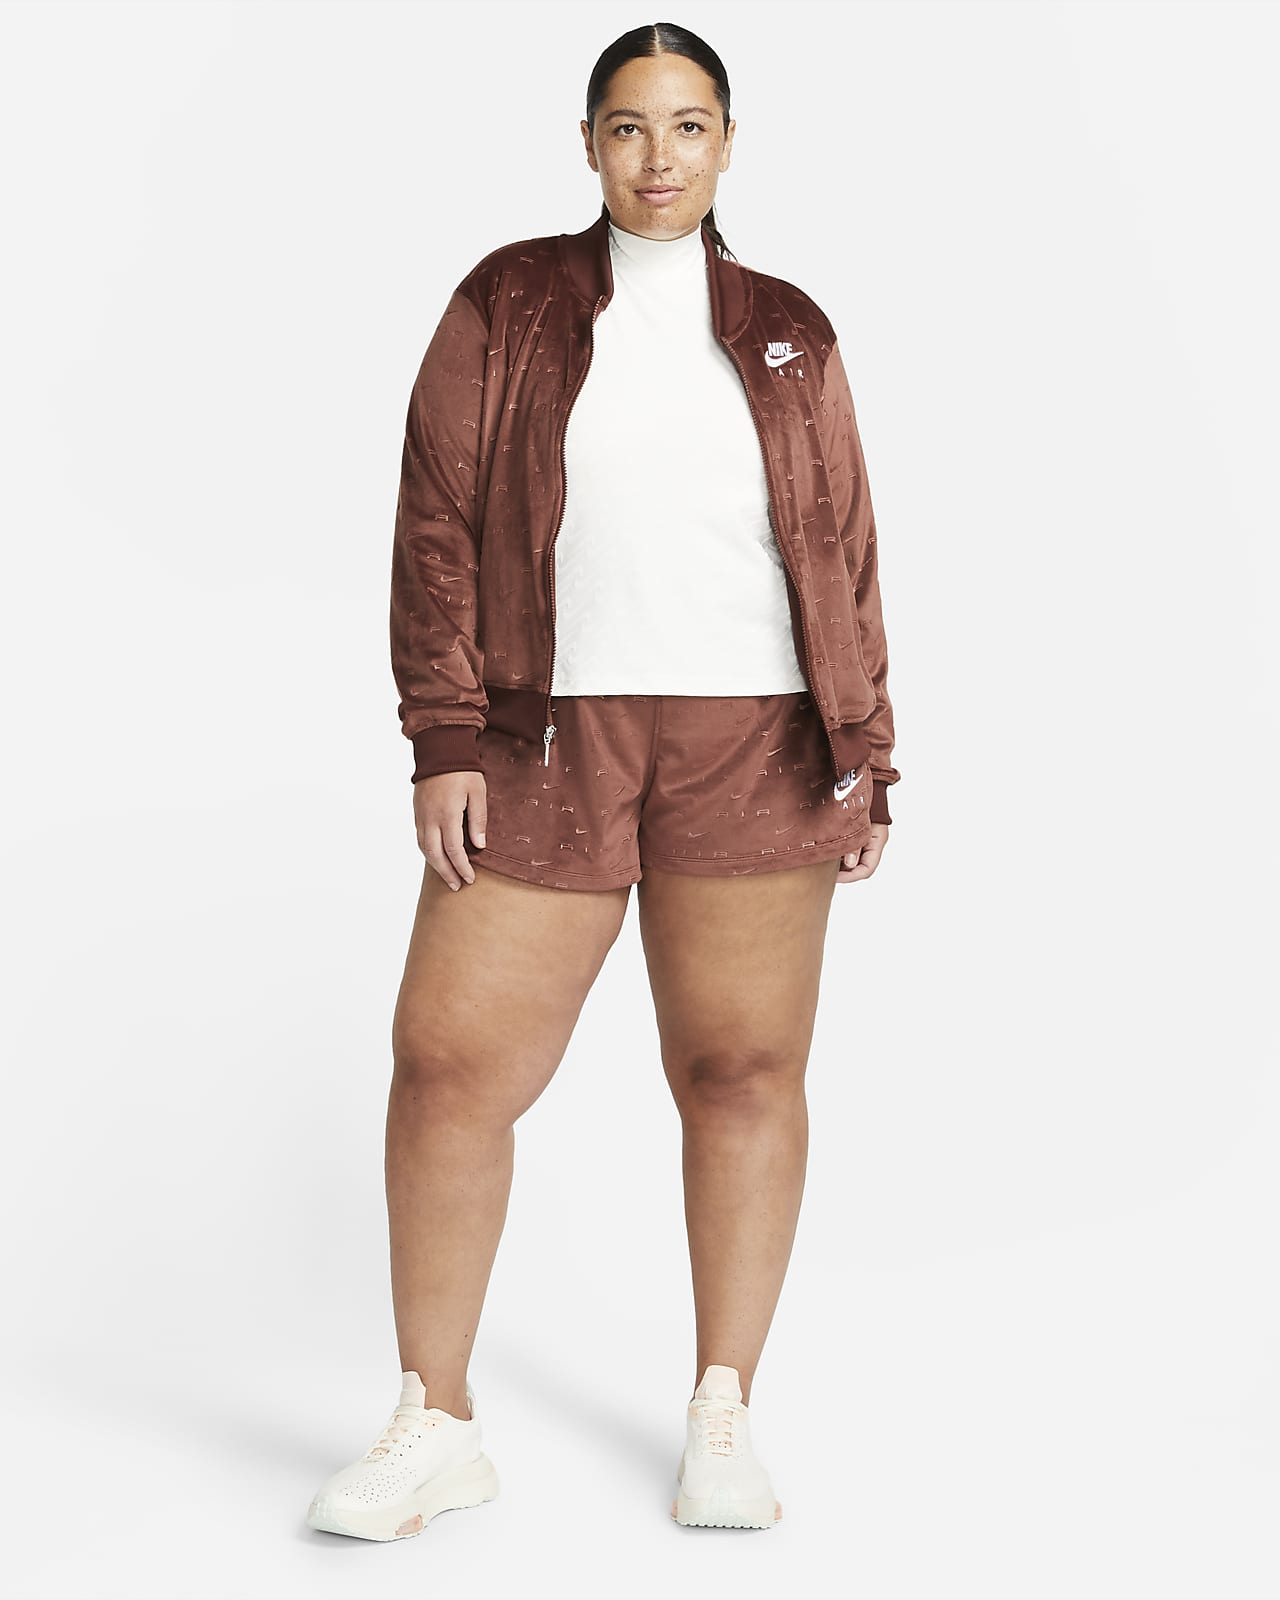 Fantasifulde Brandy build Nike Air Velour Women's Jacket (Plus Size). Nike.com